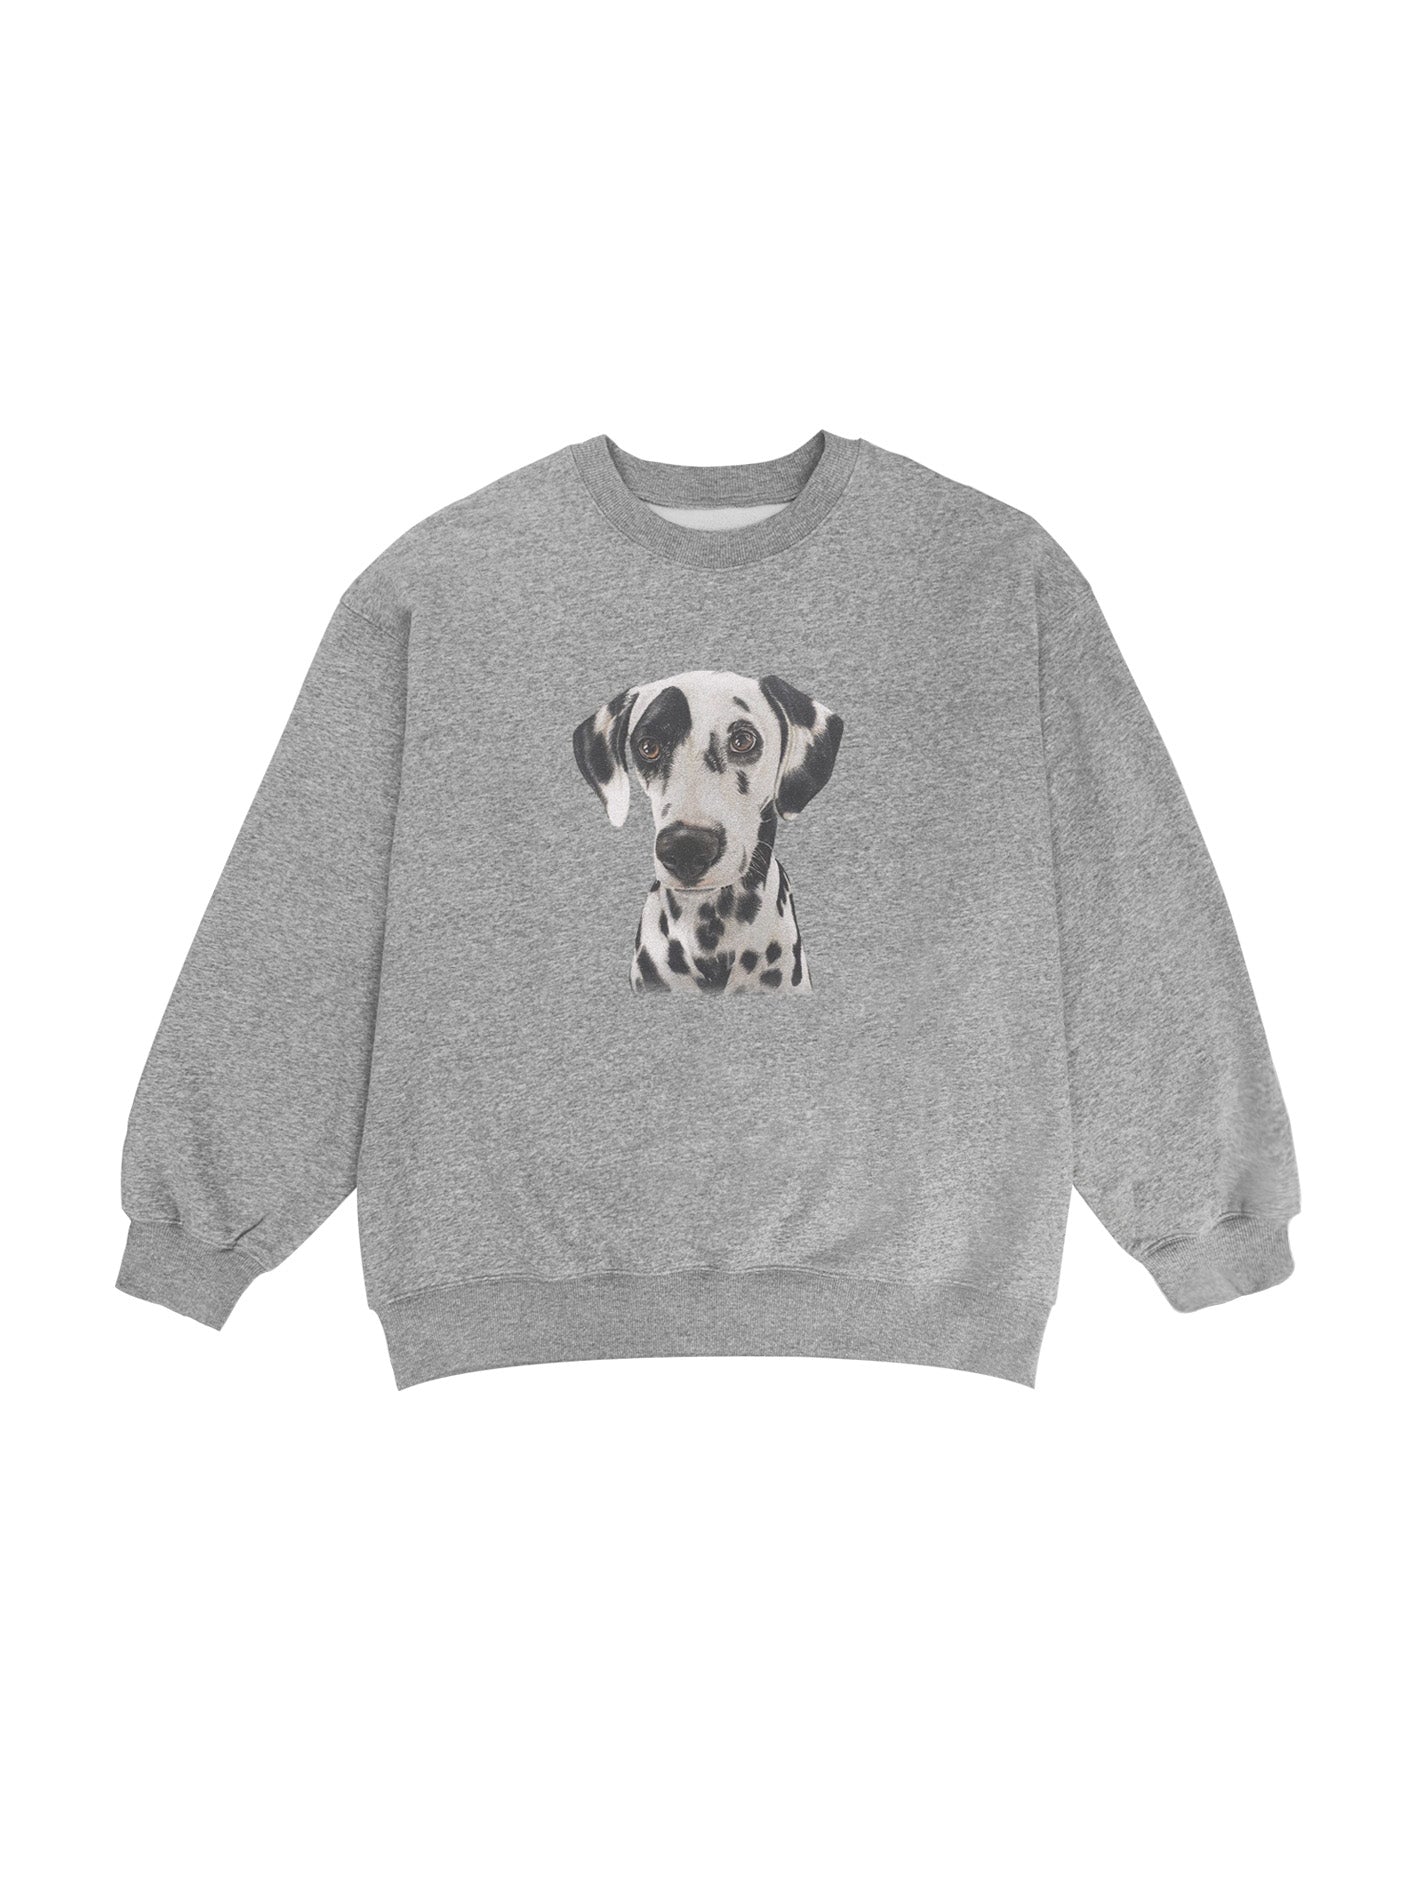  gray Dalmatian sweatshirt